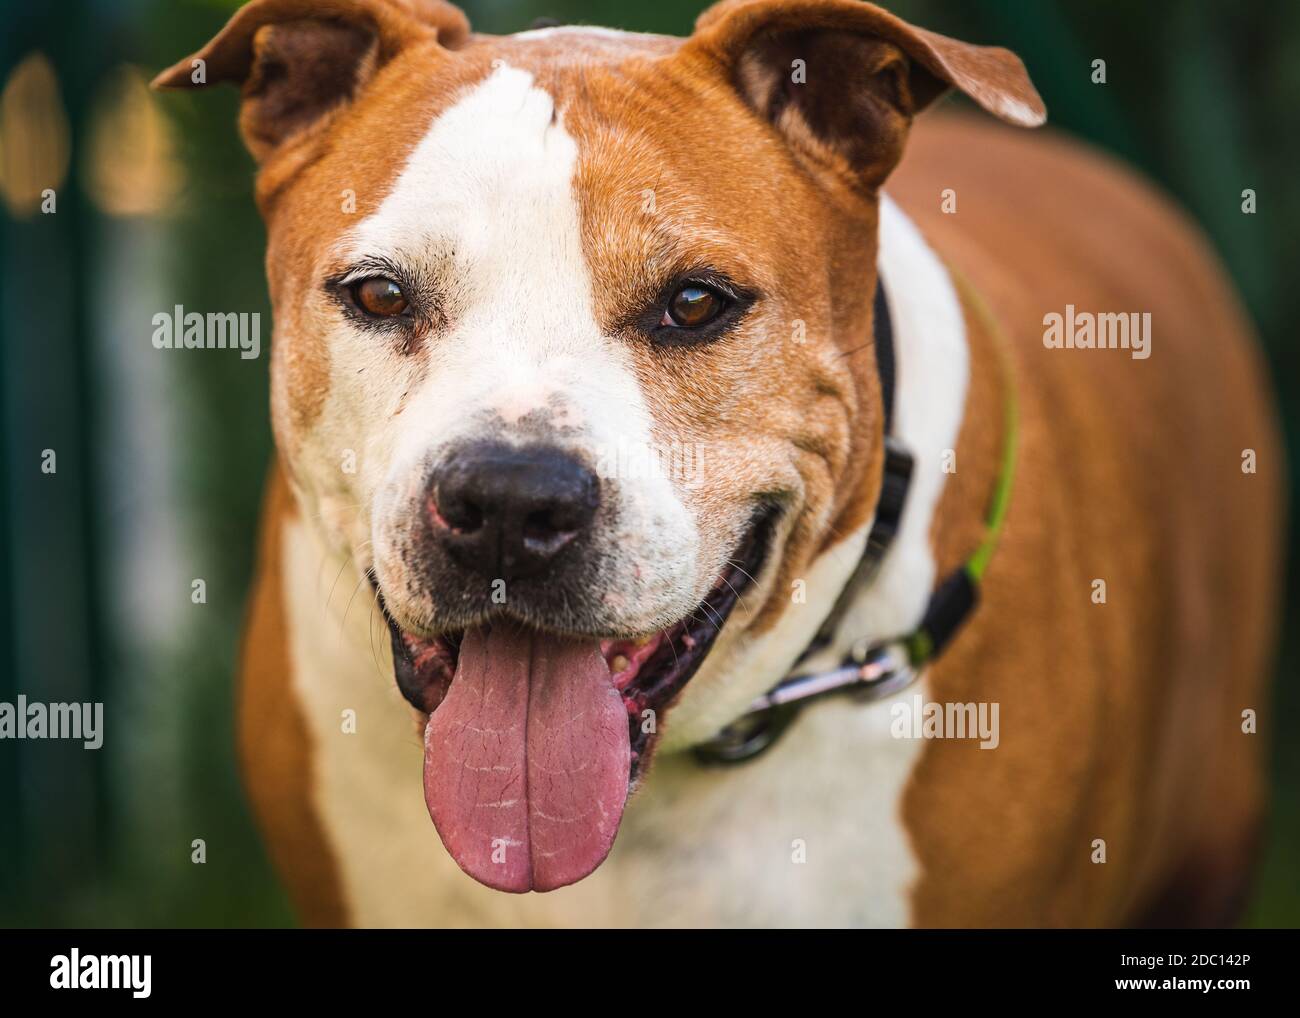 Staffordshire Amstaff Hund erholt Gesundheit nach Schlaganfall.  Hundegesundheitskonzept Stockfotografie - Alamy